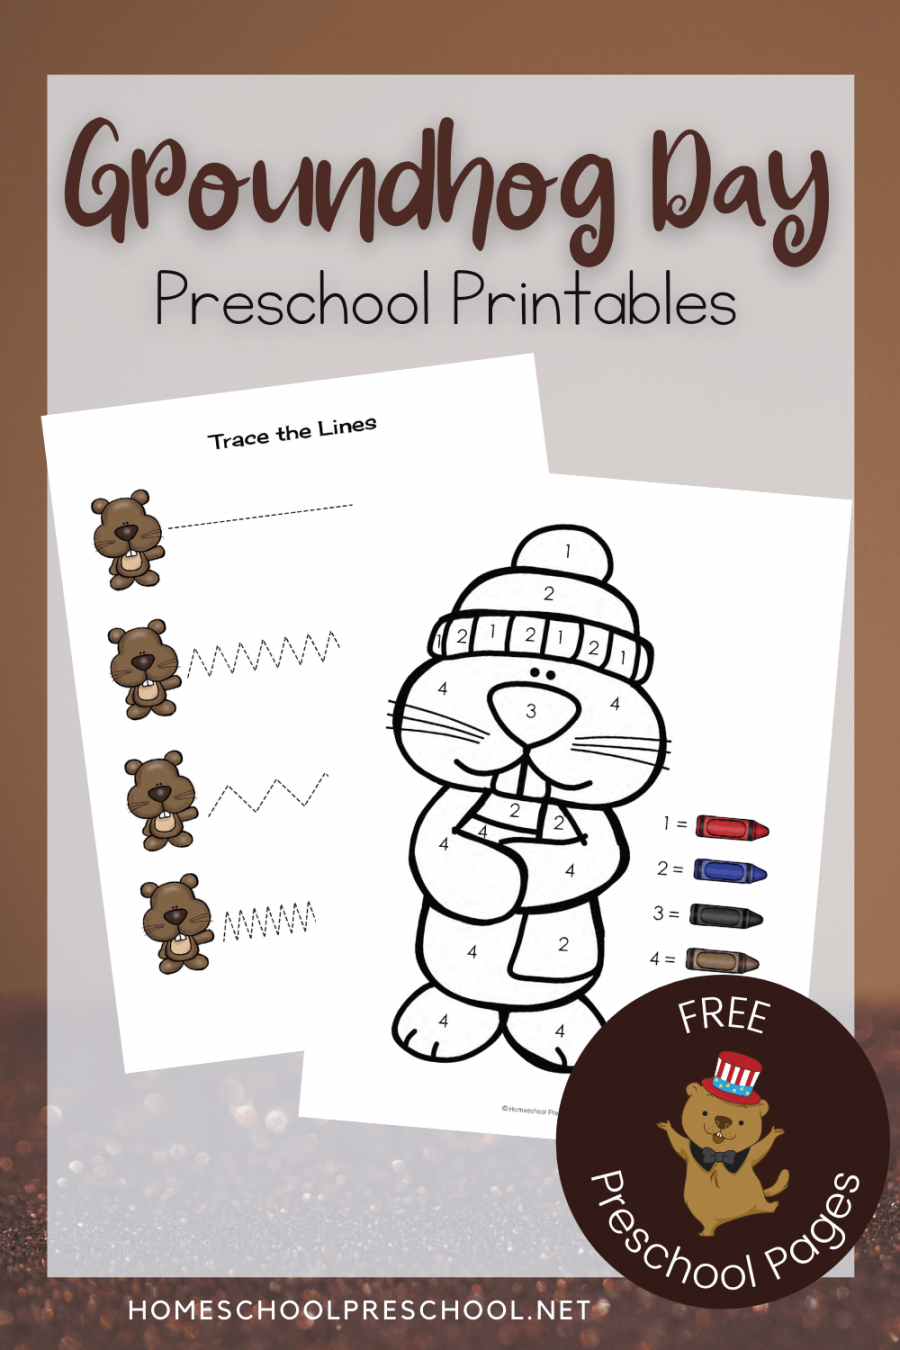 Free Groundhog Day Printables - Printable - Groundhog Day Printable Activities for Preschoolers